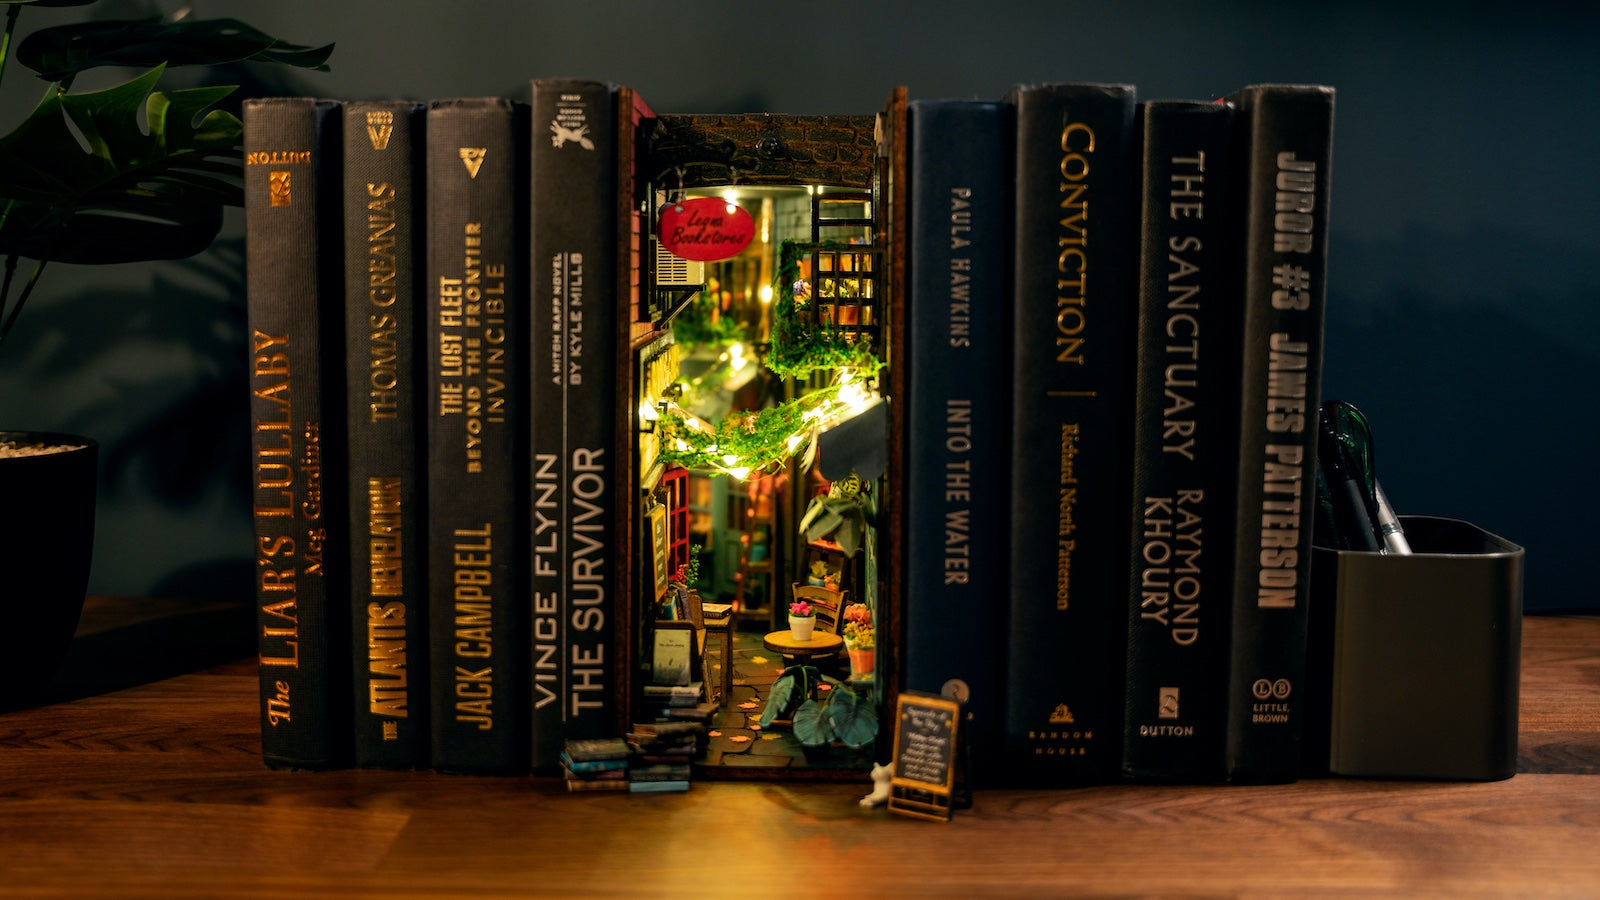  Fsolis DIY Book Nook Kit, Miniature House Kit Book Nook  Dollhouse Kit Bookshelf Decor Booknook kit DIY Eternal Bookstore Book Nook  Library Bookshelf Insert DIY Bookends Book Nook Kits for Adults 